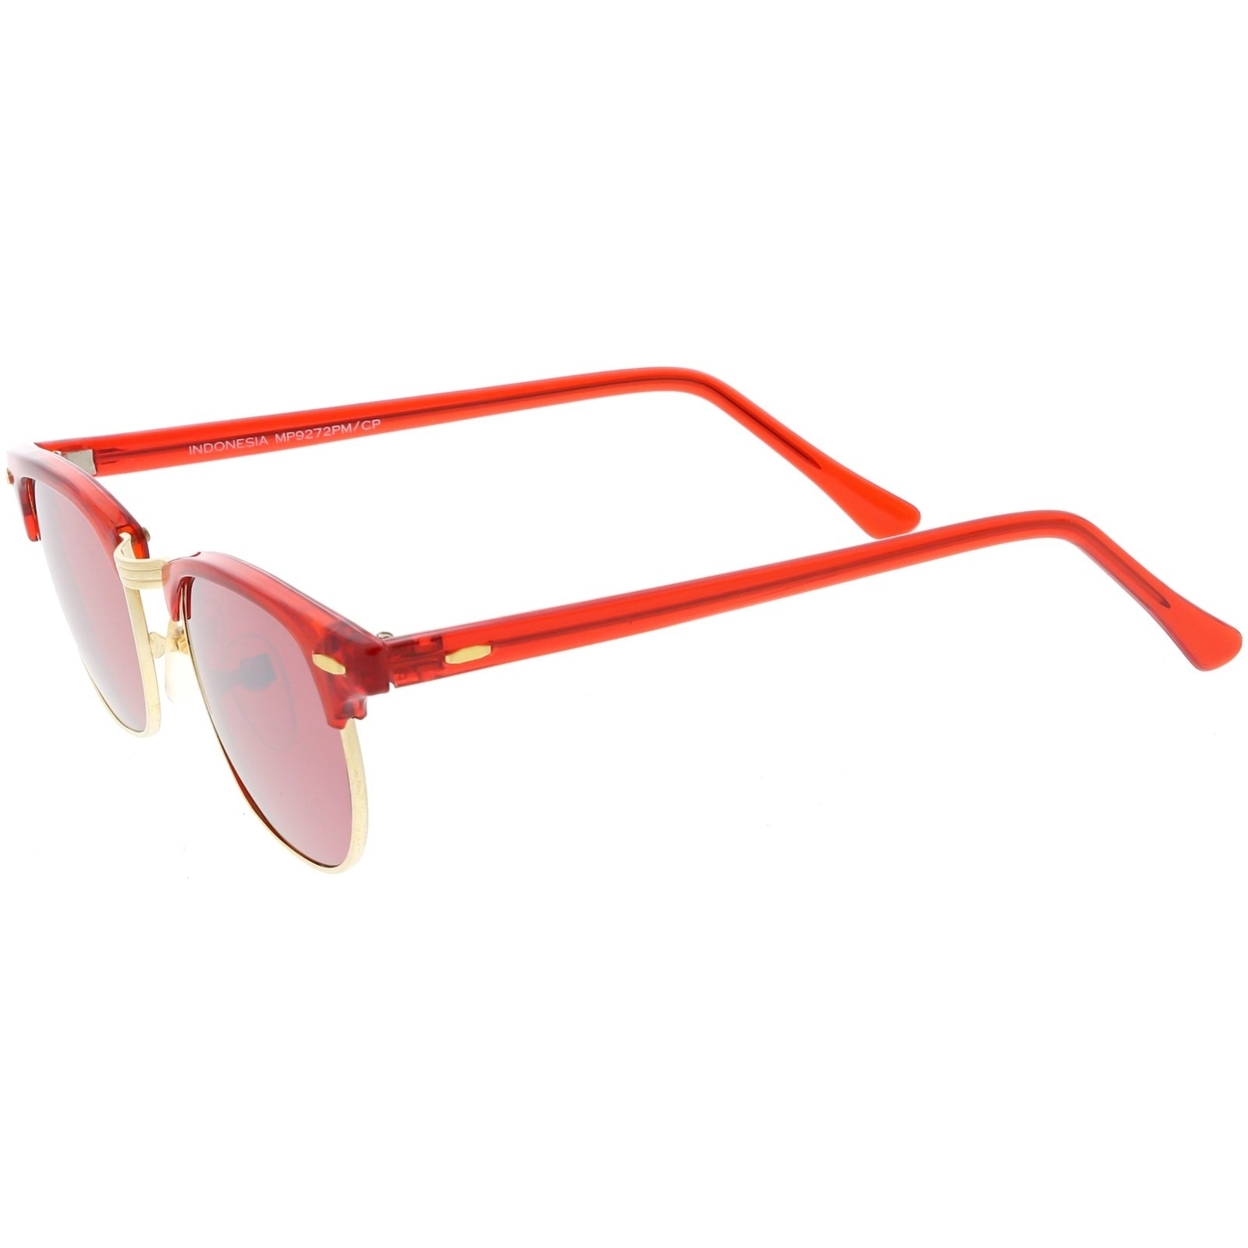 True Vintage Horn Rimmed Semi Rimless Sunglasses Mirrored Square Lens 49mm - Magenta / Red Mirror